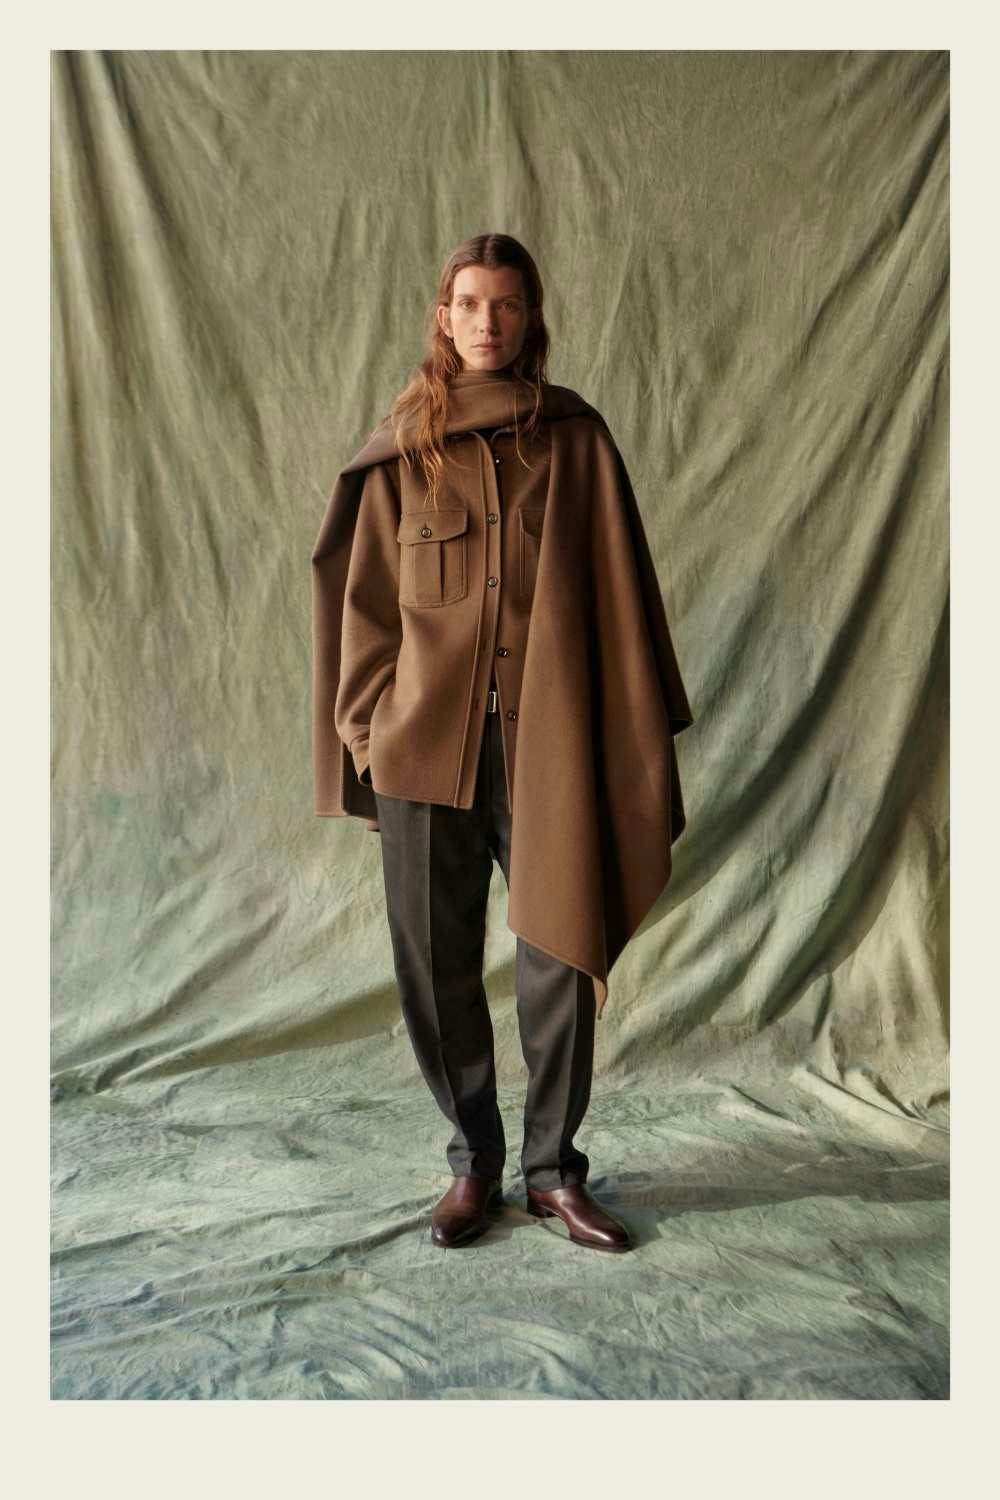 fashion cape clothing coat cloak poncho